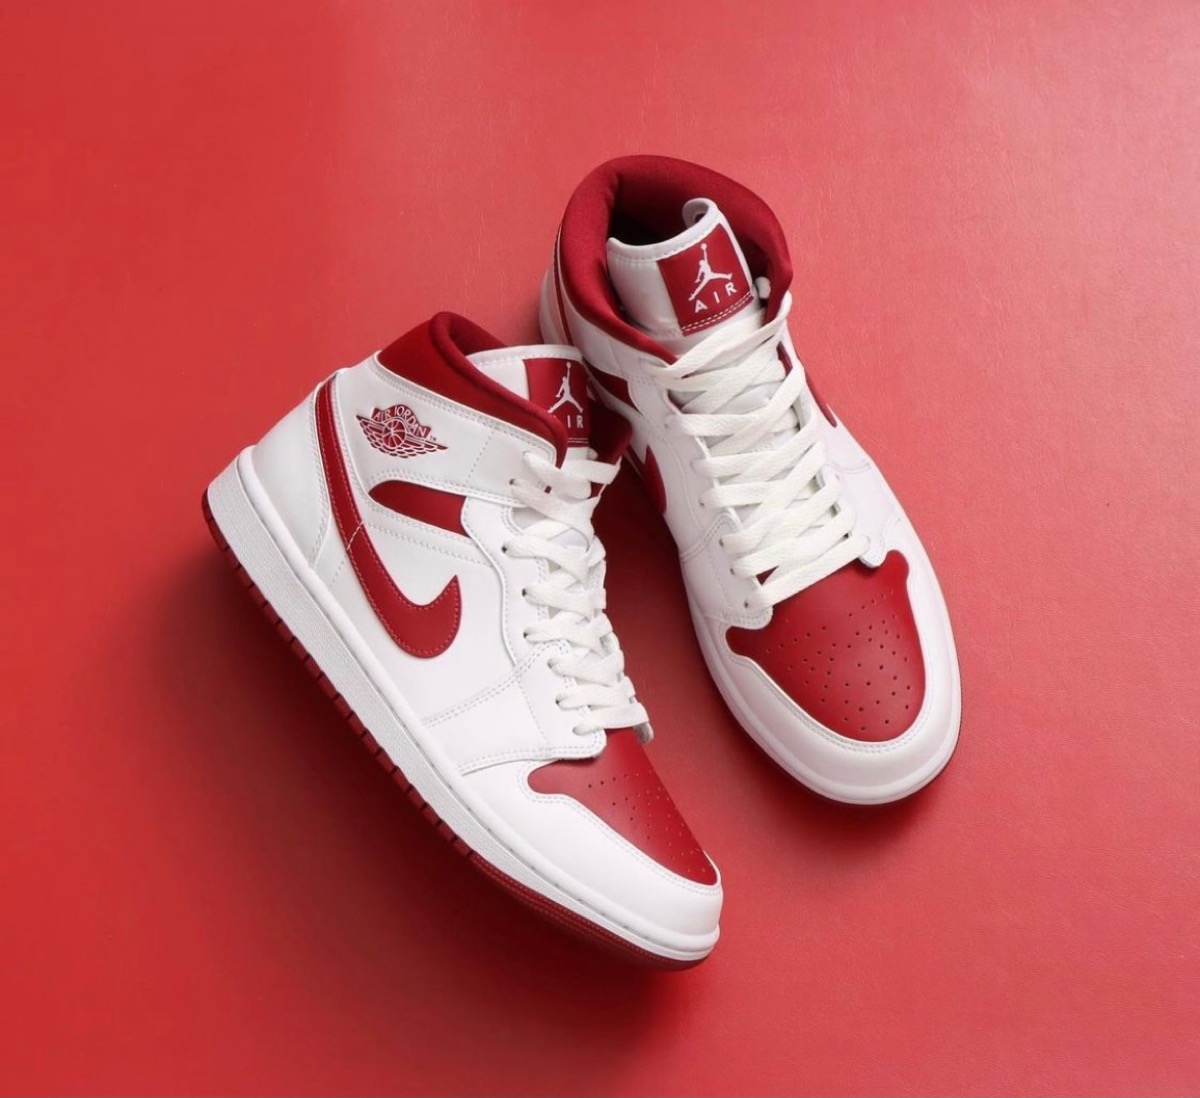 Nike Air Jordan 1 Mid White Pomegranate が国内1月9日 4月12日に発売予定 Up To Date